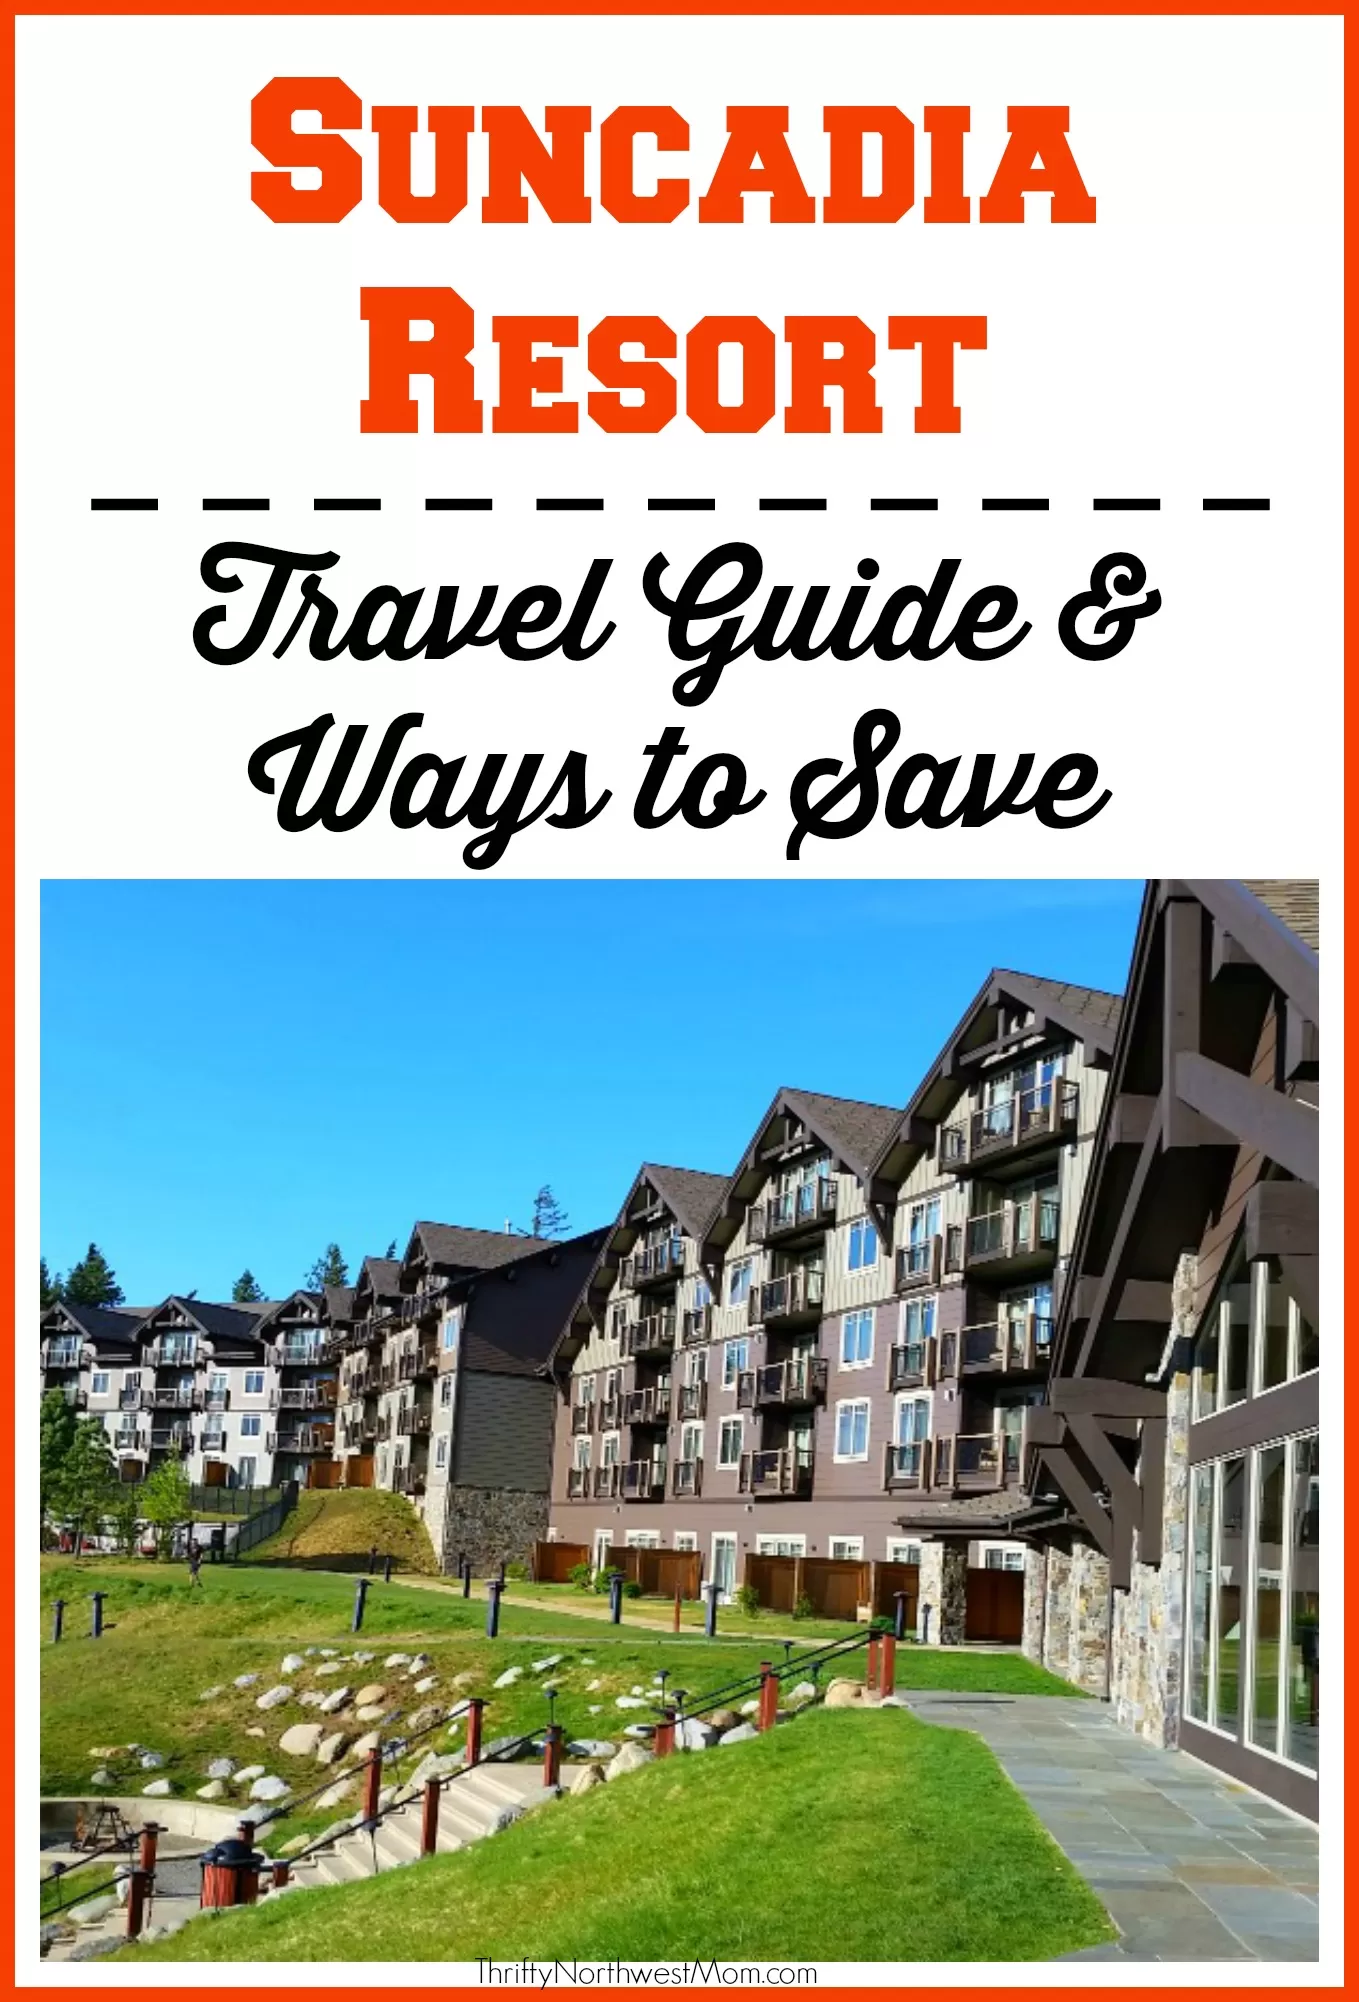 Suncadia Resort Travel Guide & Ways to Save